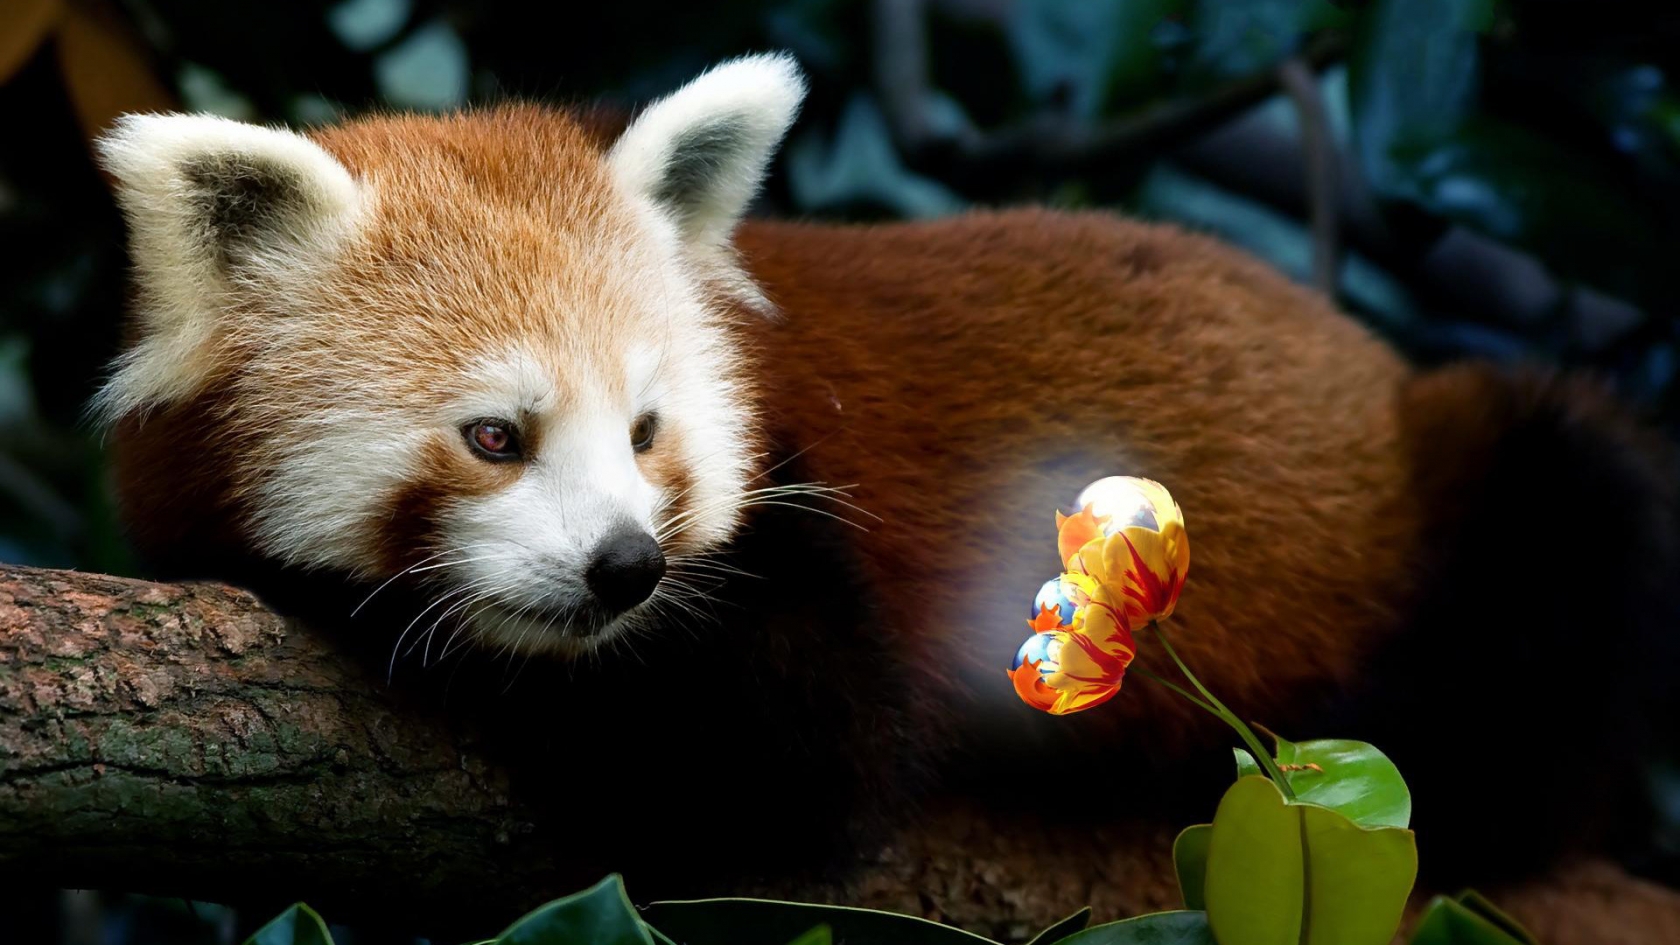 Red Panda Firefox for 1680 x 945 HDTV resolution